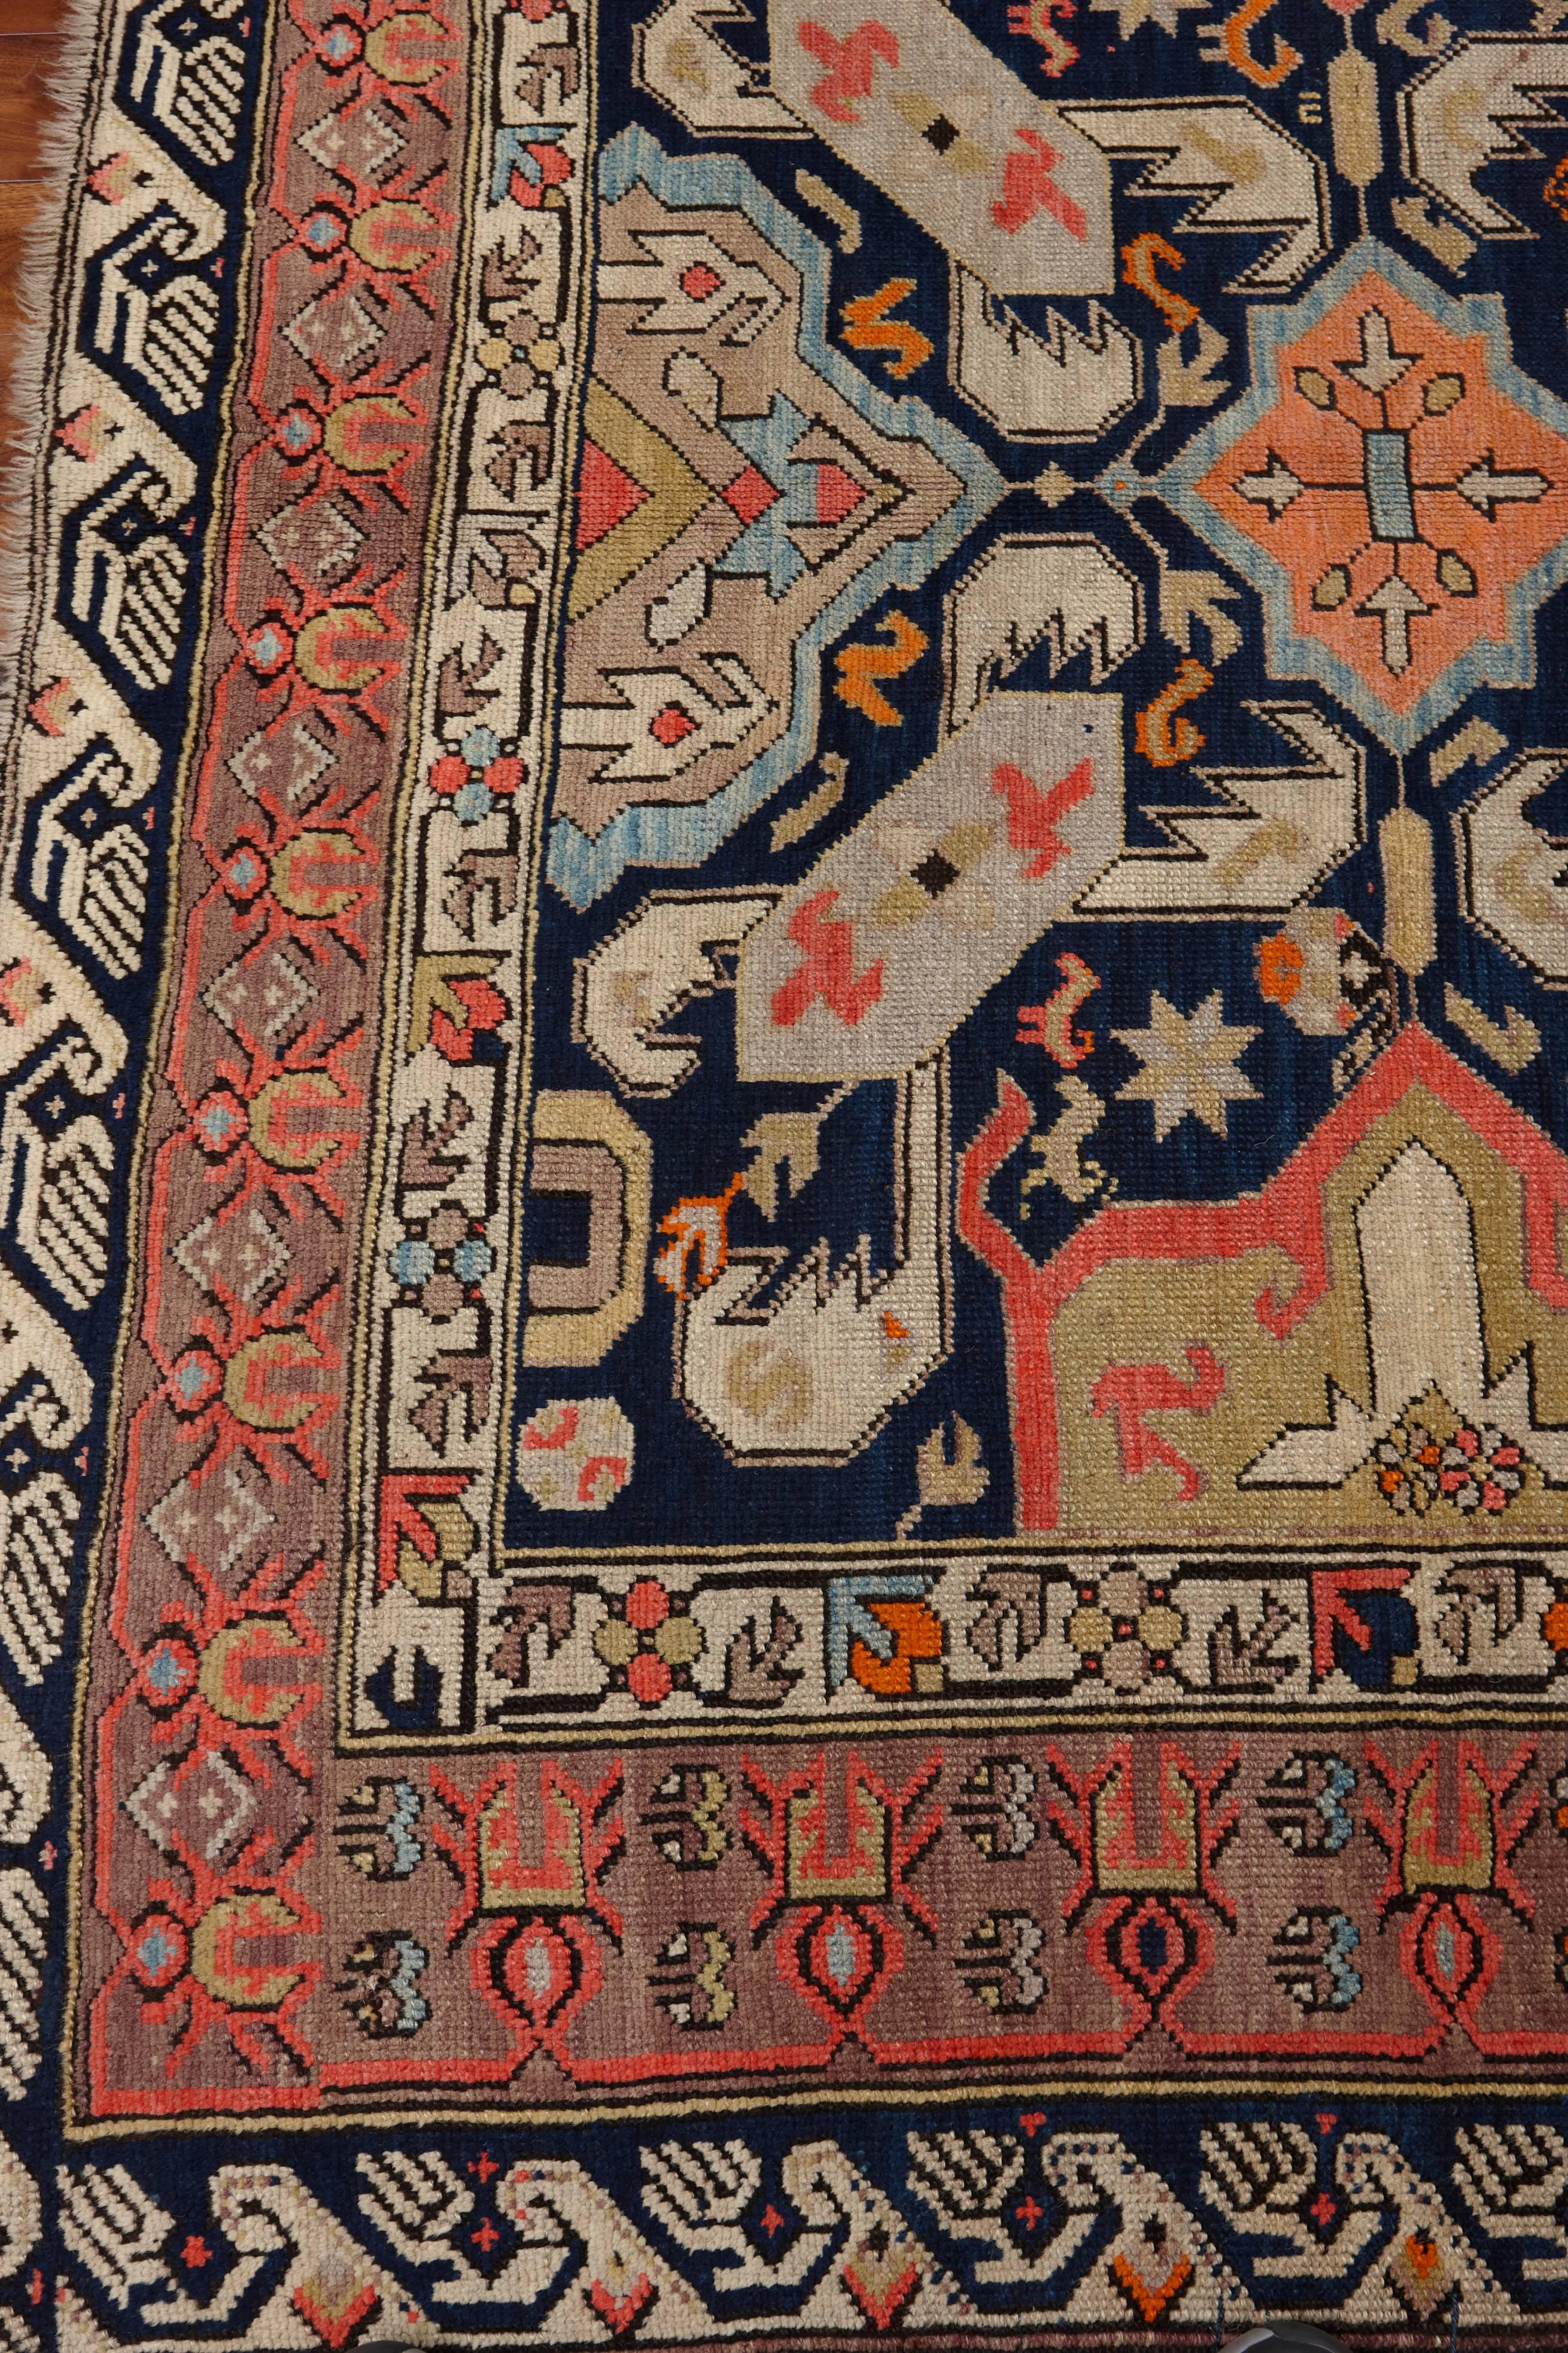 Late 19th Century 19th Century Rare Karabagh Gallery Carpet For Sale